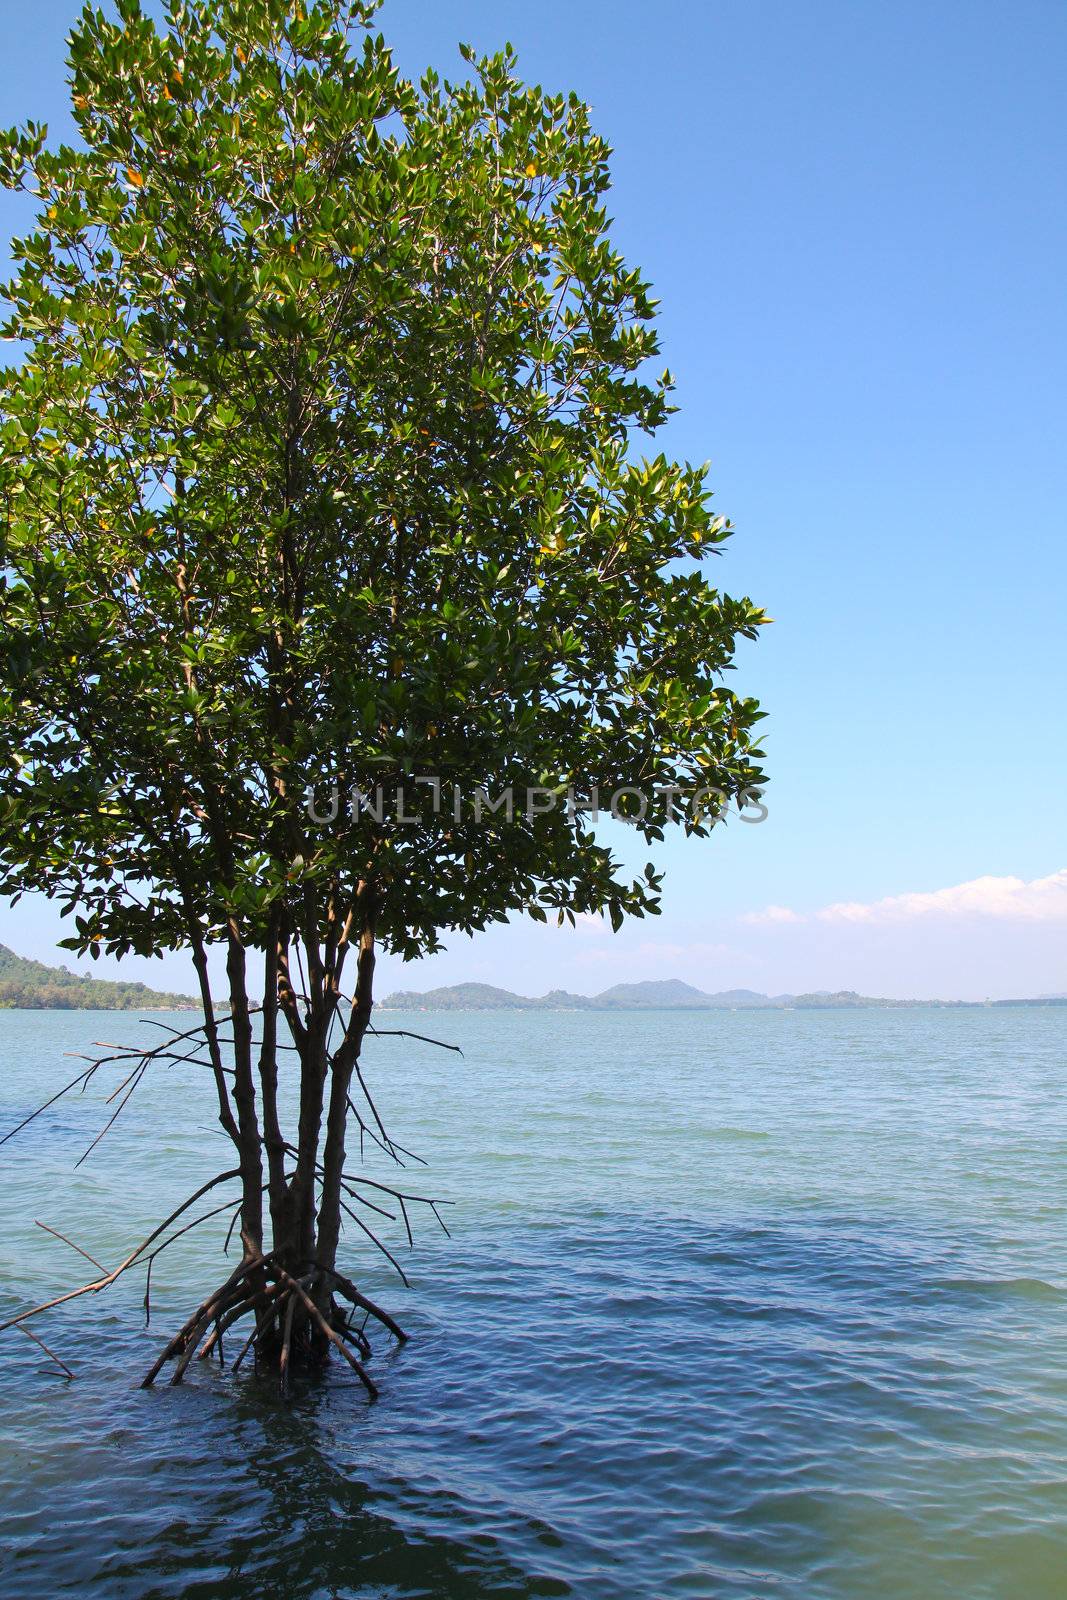 Mangrove tree at ocean beach with blue sky by nuchylee